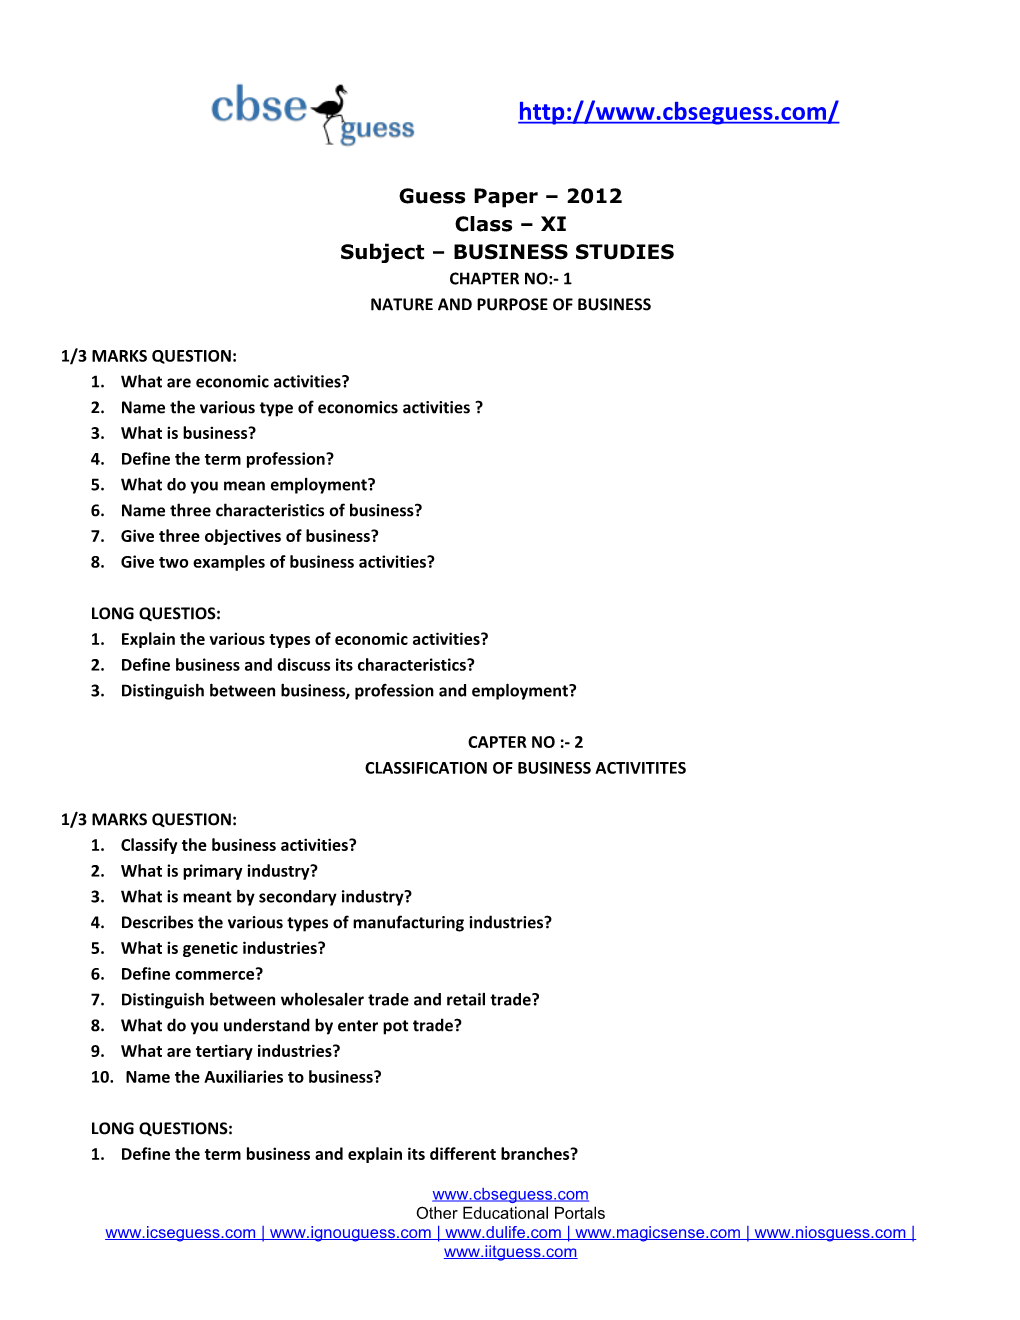 Guess Paper 2012 Class XI Subject BUSINESS STUDIES